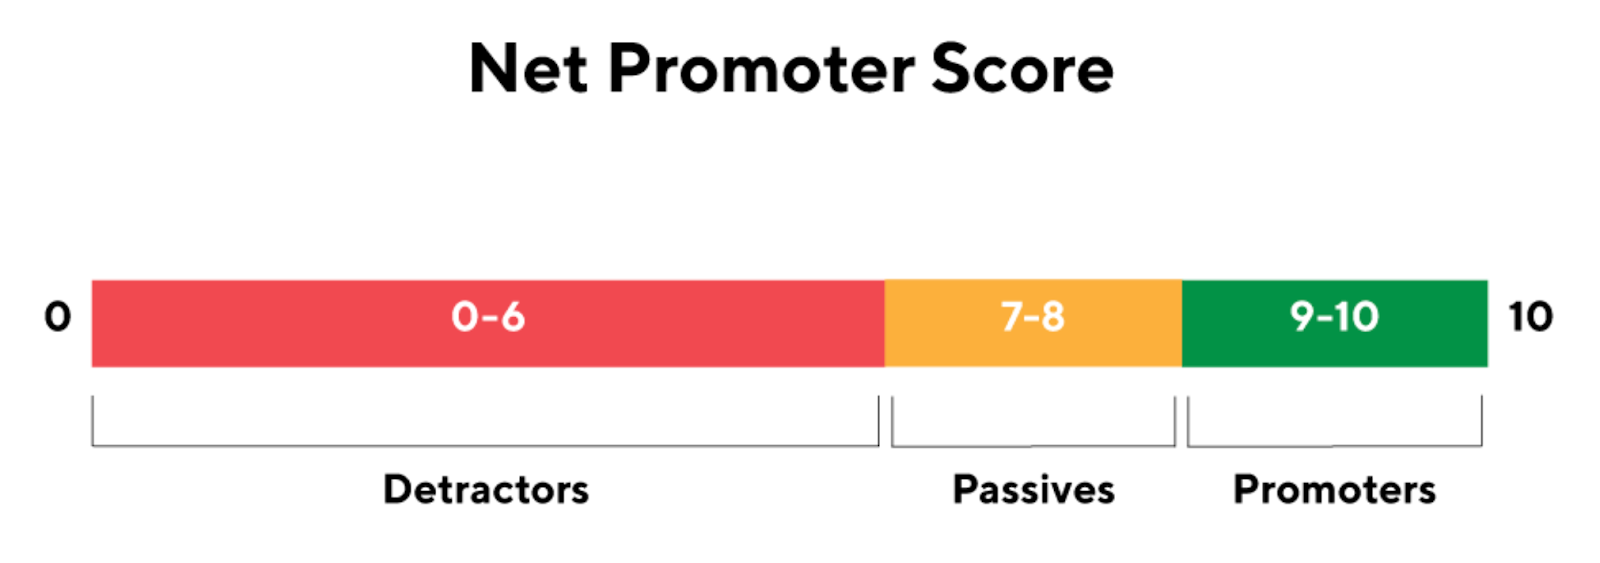 net promoter score visual